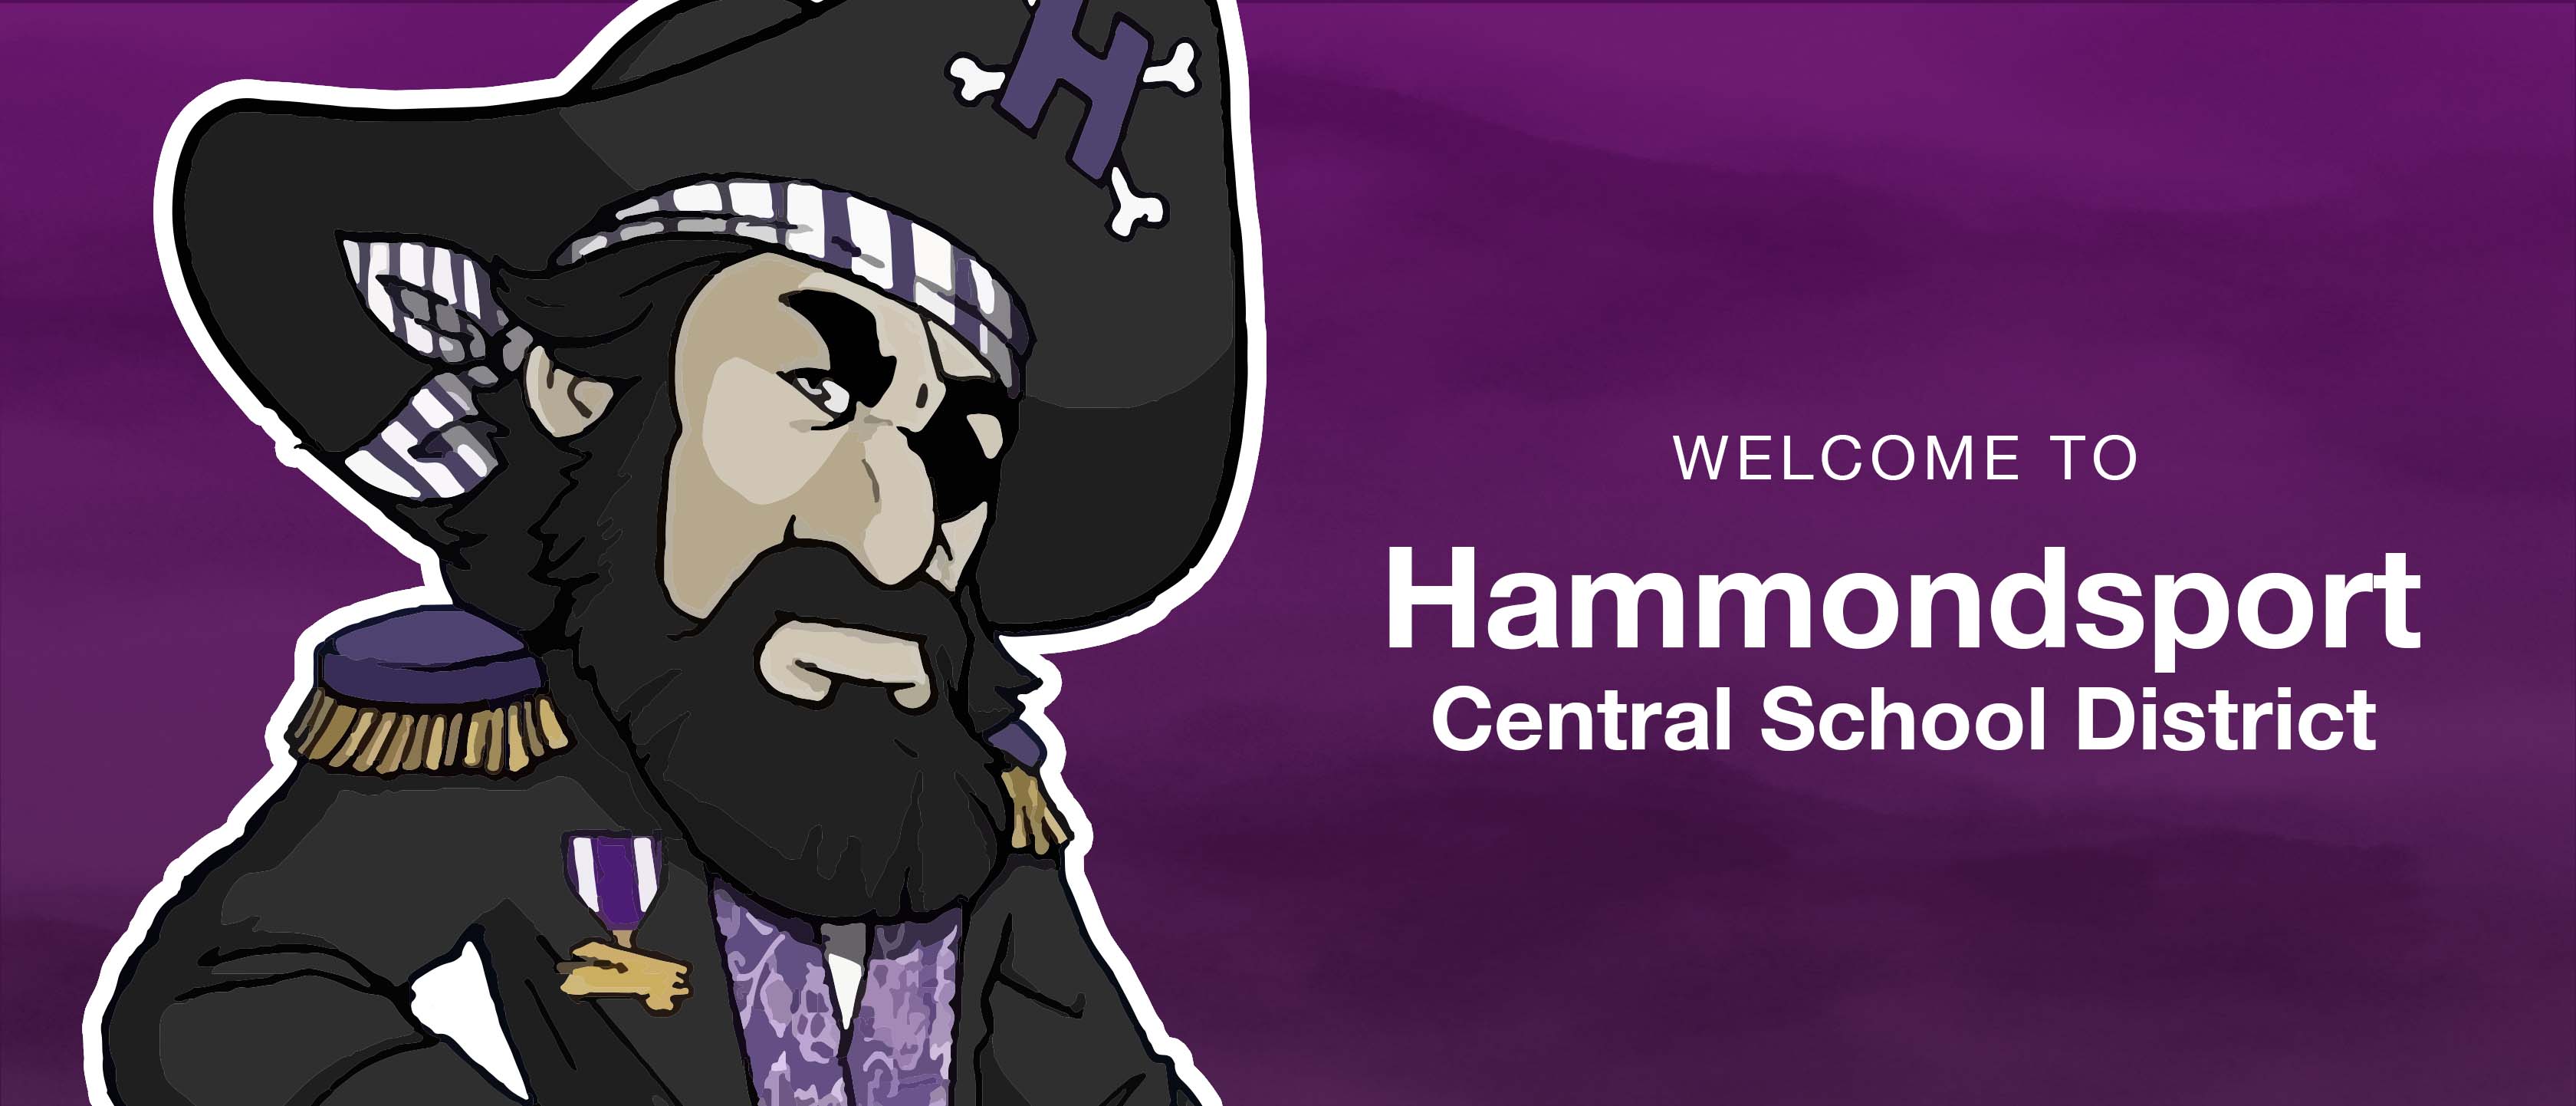 Welcome to Hammondsport Central School District